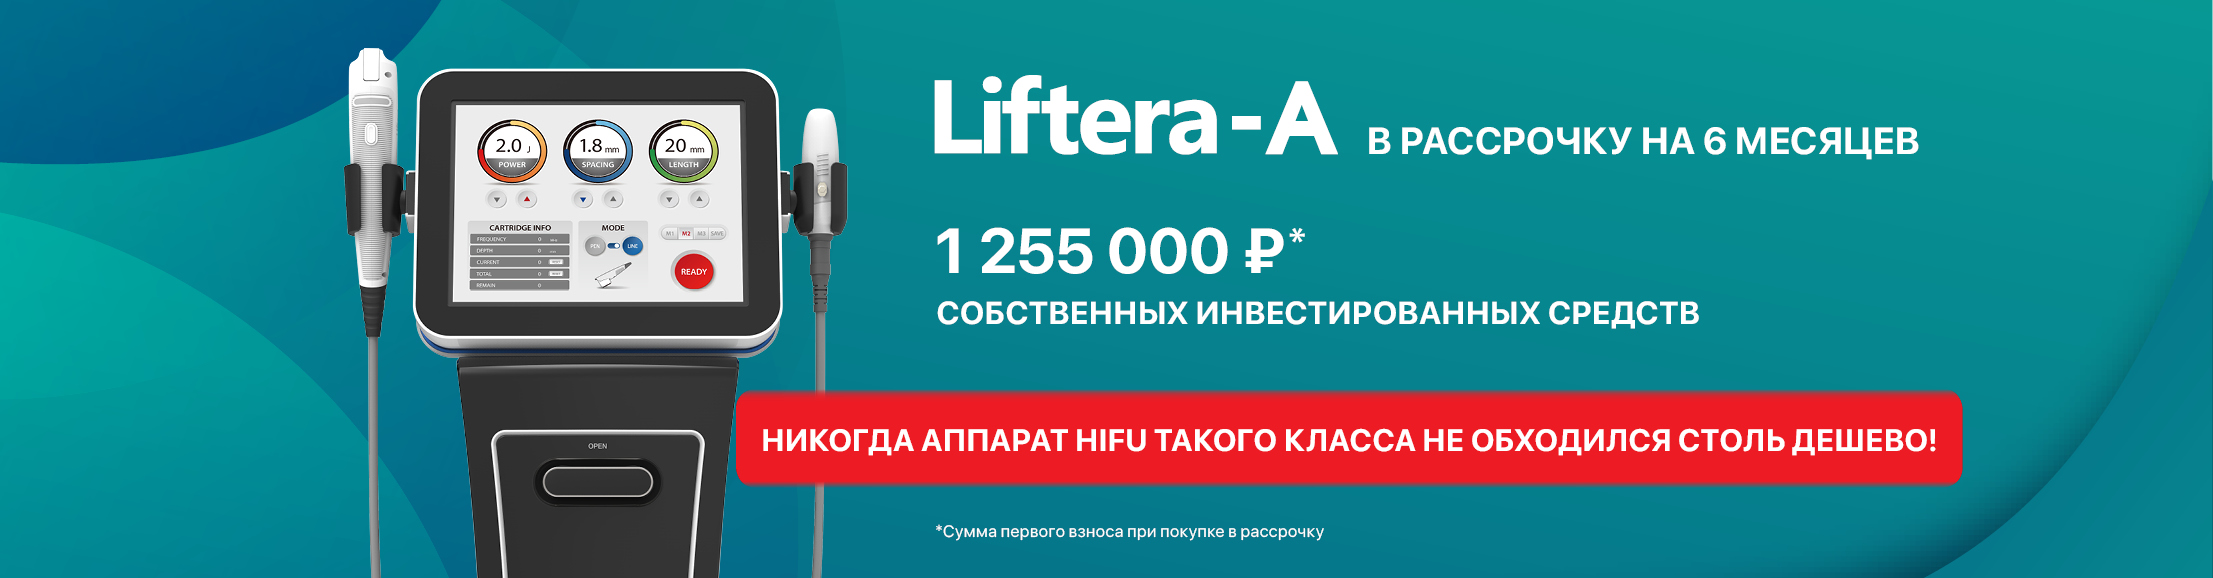 Liftera-A в рассрочку